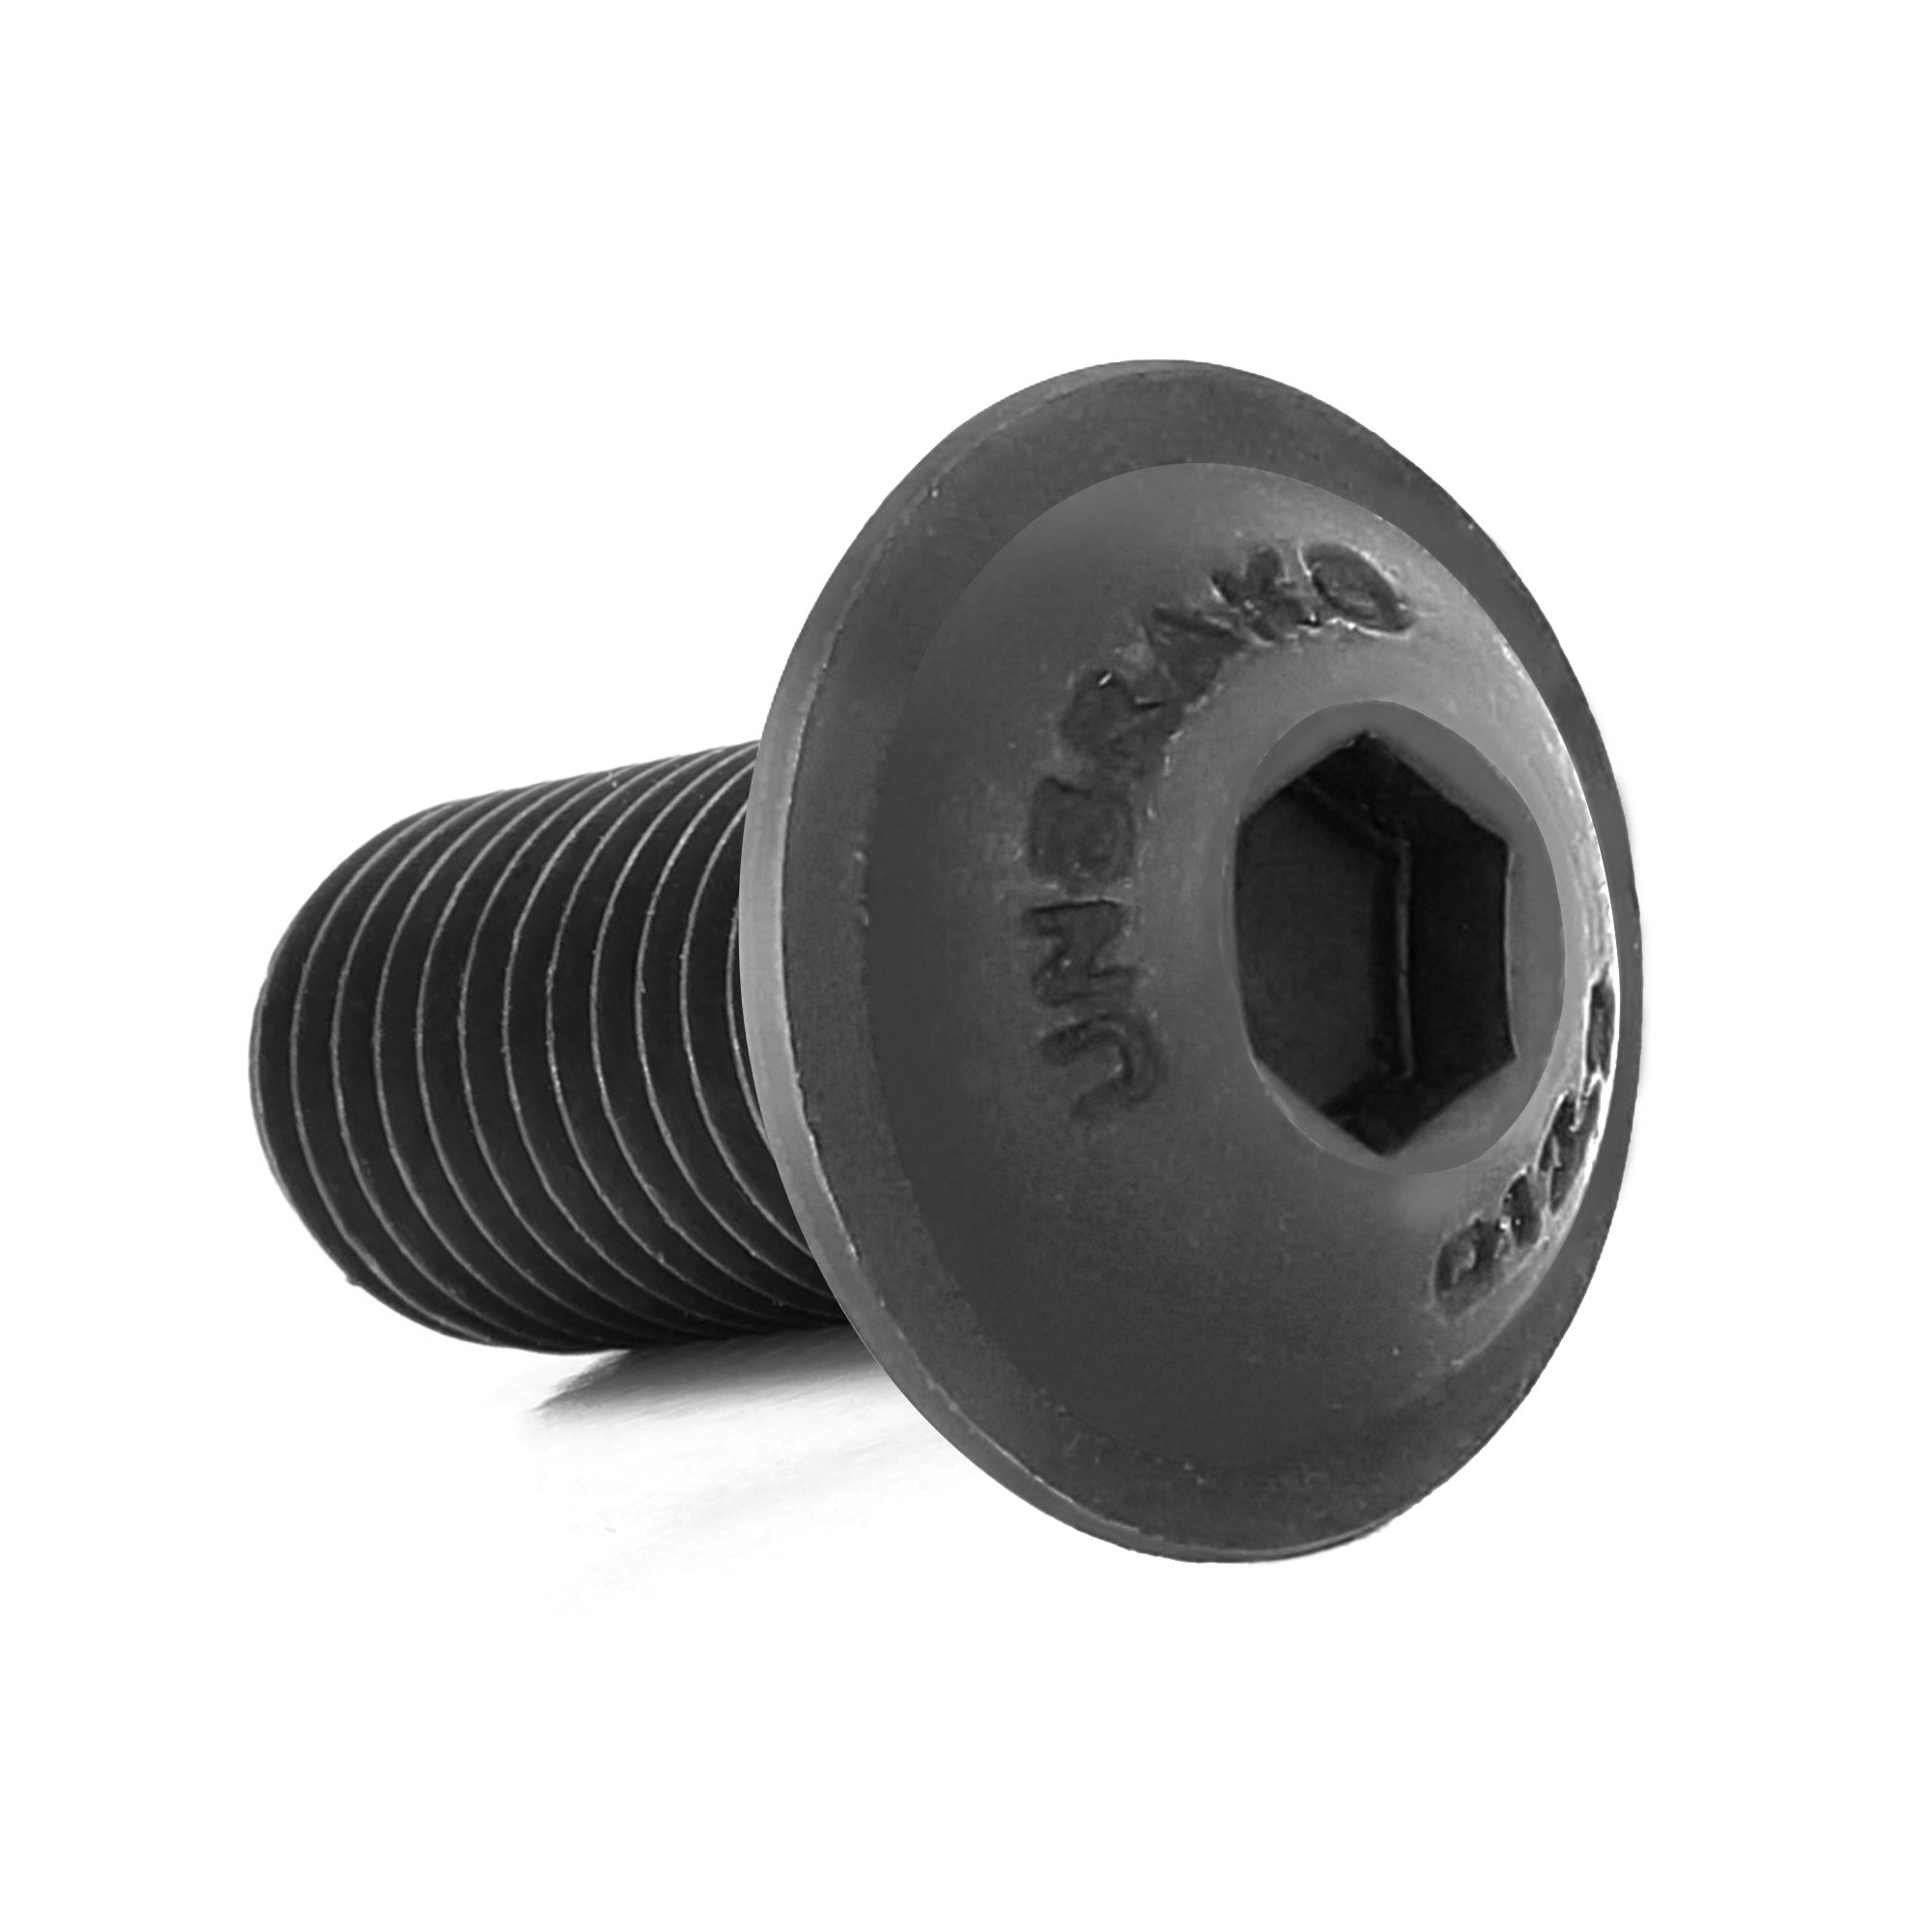 3/8-16x1 ASME B18.3 Alloy Steel Flange Button Hd Socket Cap Screw Full Thrd Black Oxide (Unbrako)